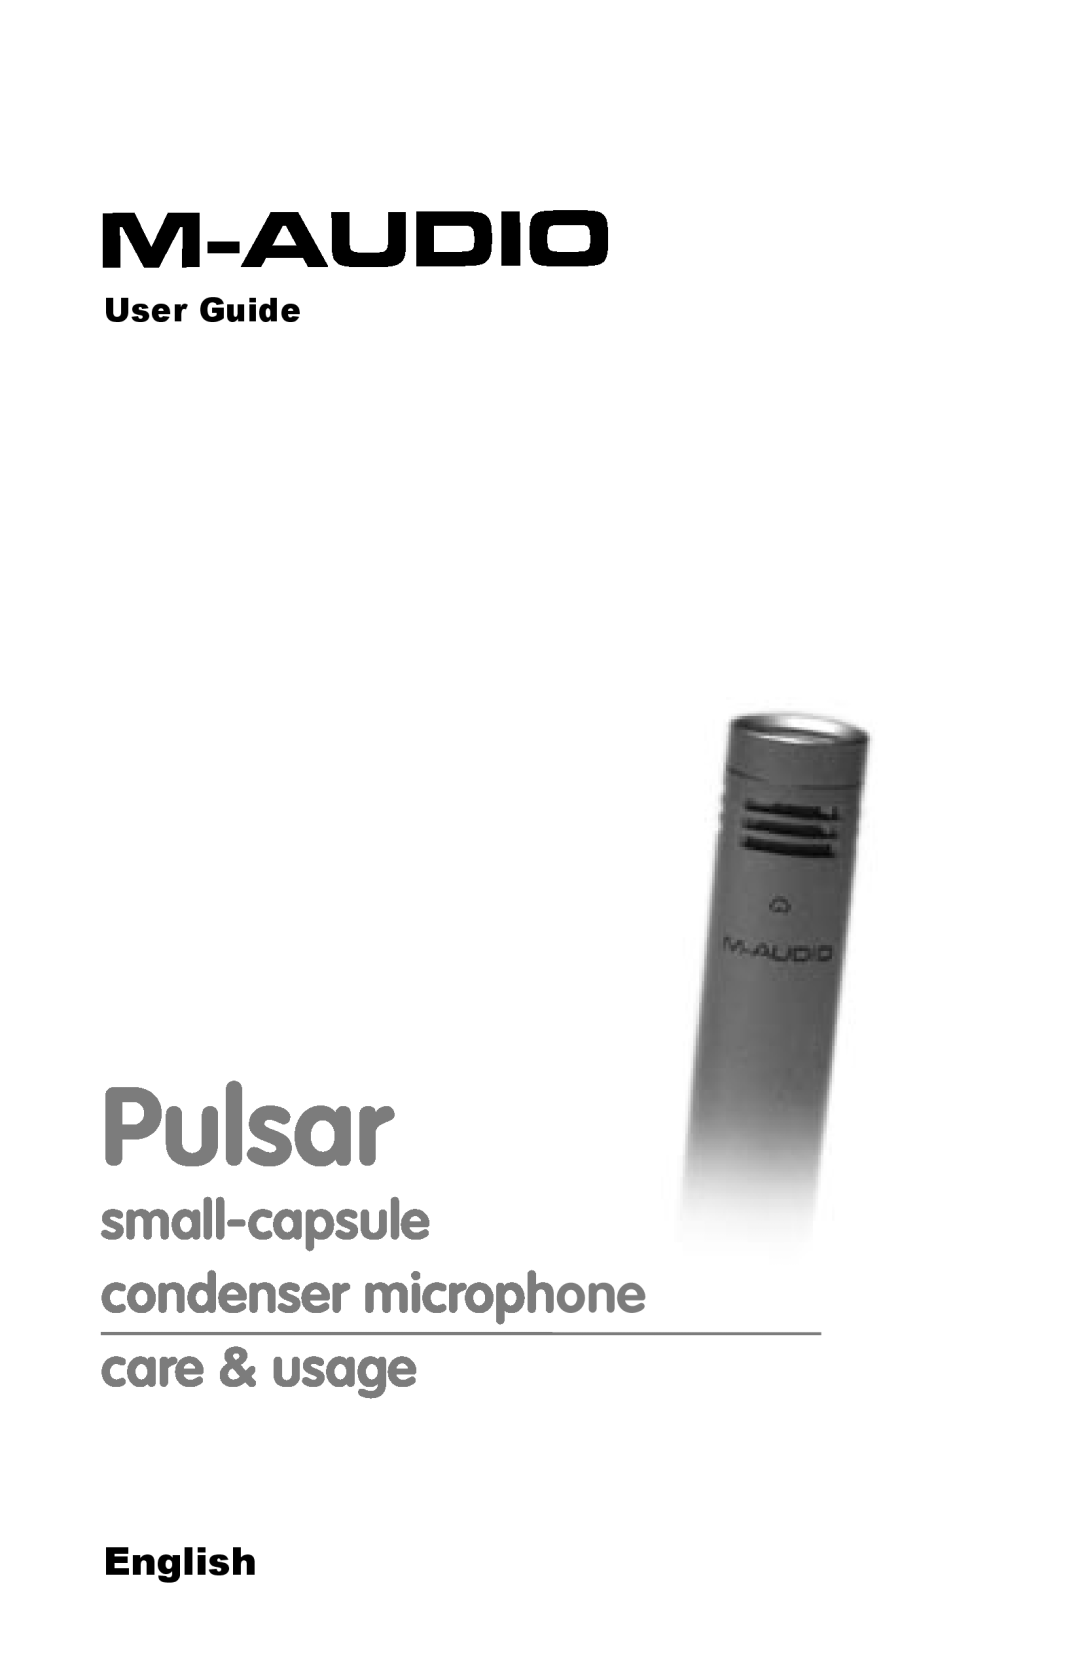 M-Audio manual Pulsar, AUDIOPHILE 192 PCI, care & usage, small-capsule condenser microphone, Español 